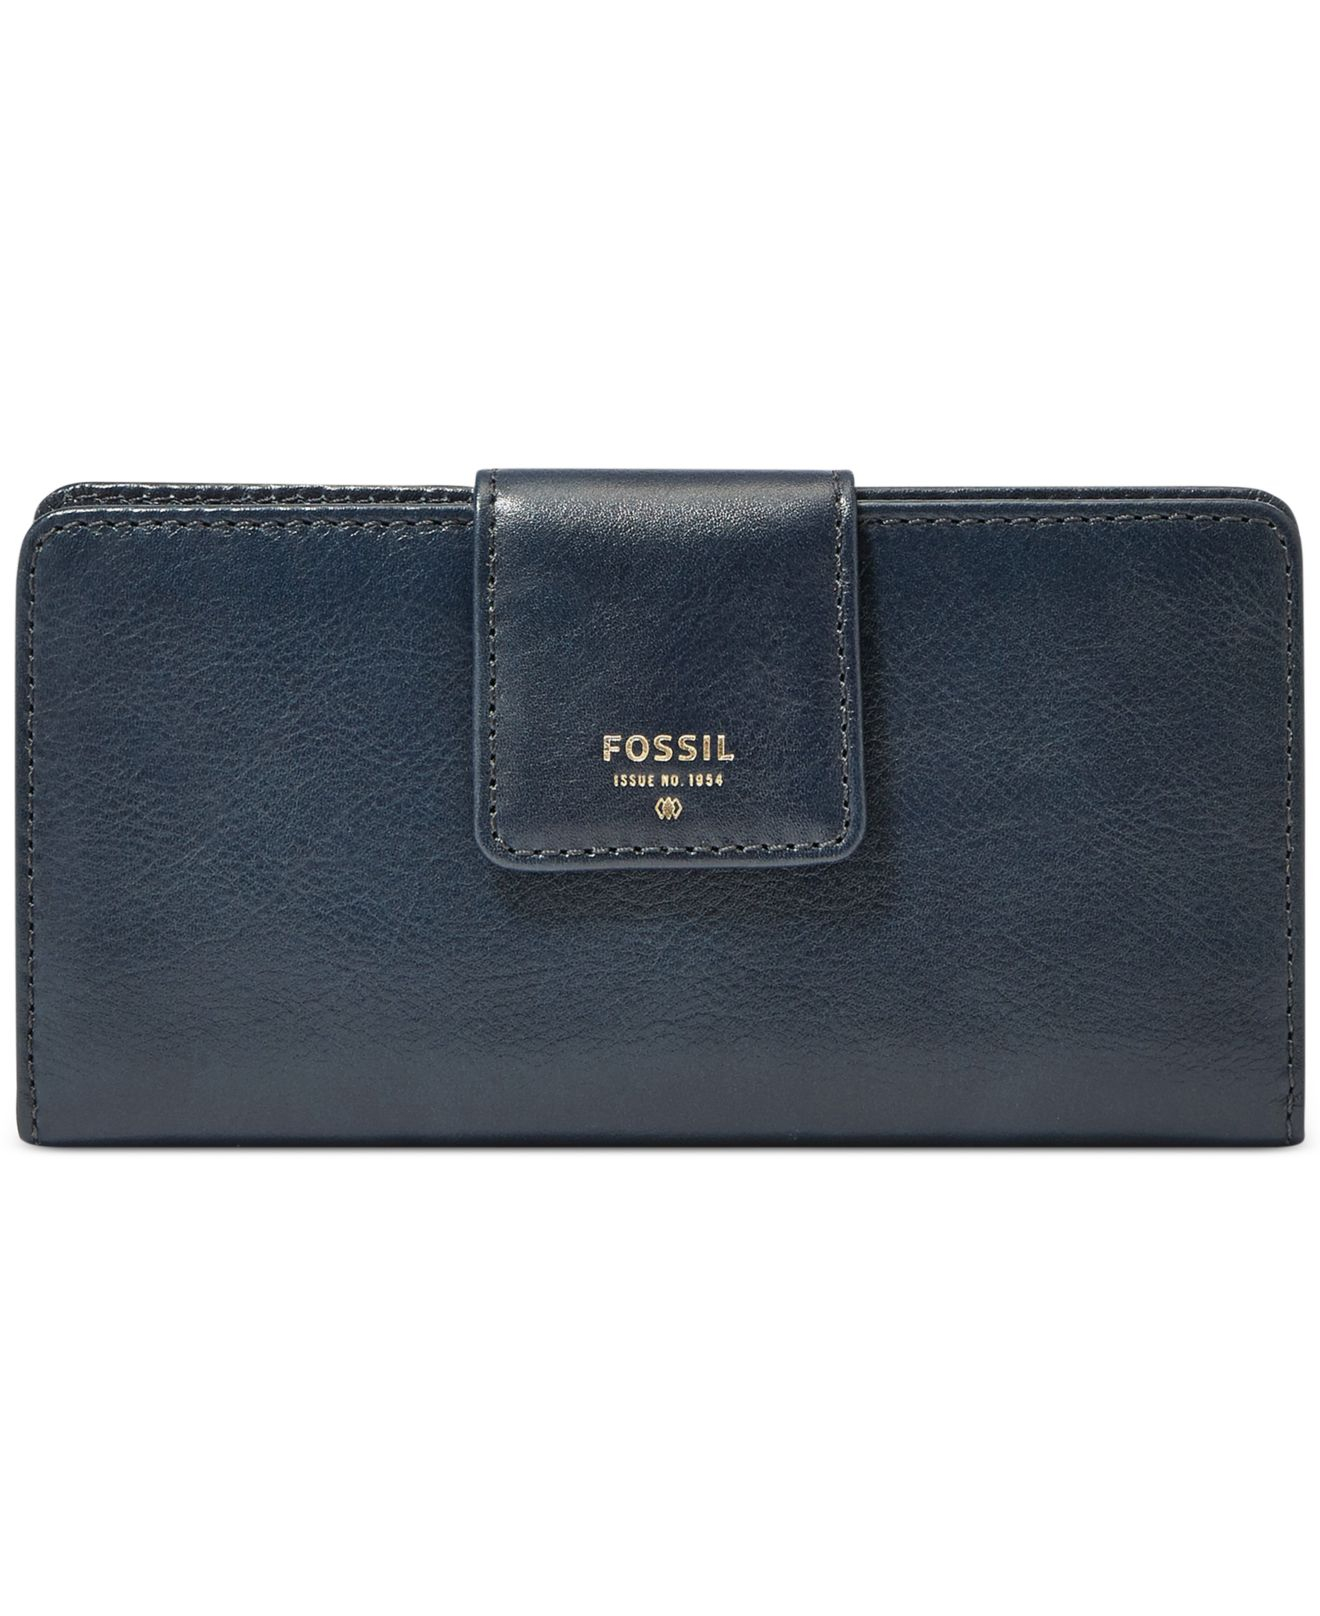 Fossil Sydney Leather Tab Clutch Wallet in Blue | Lyst